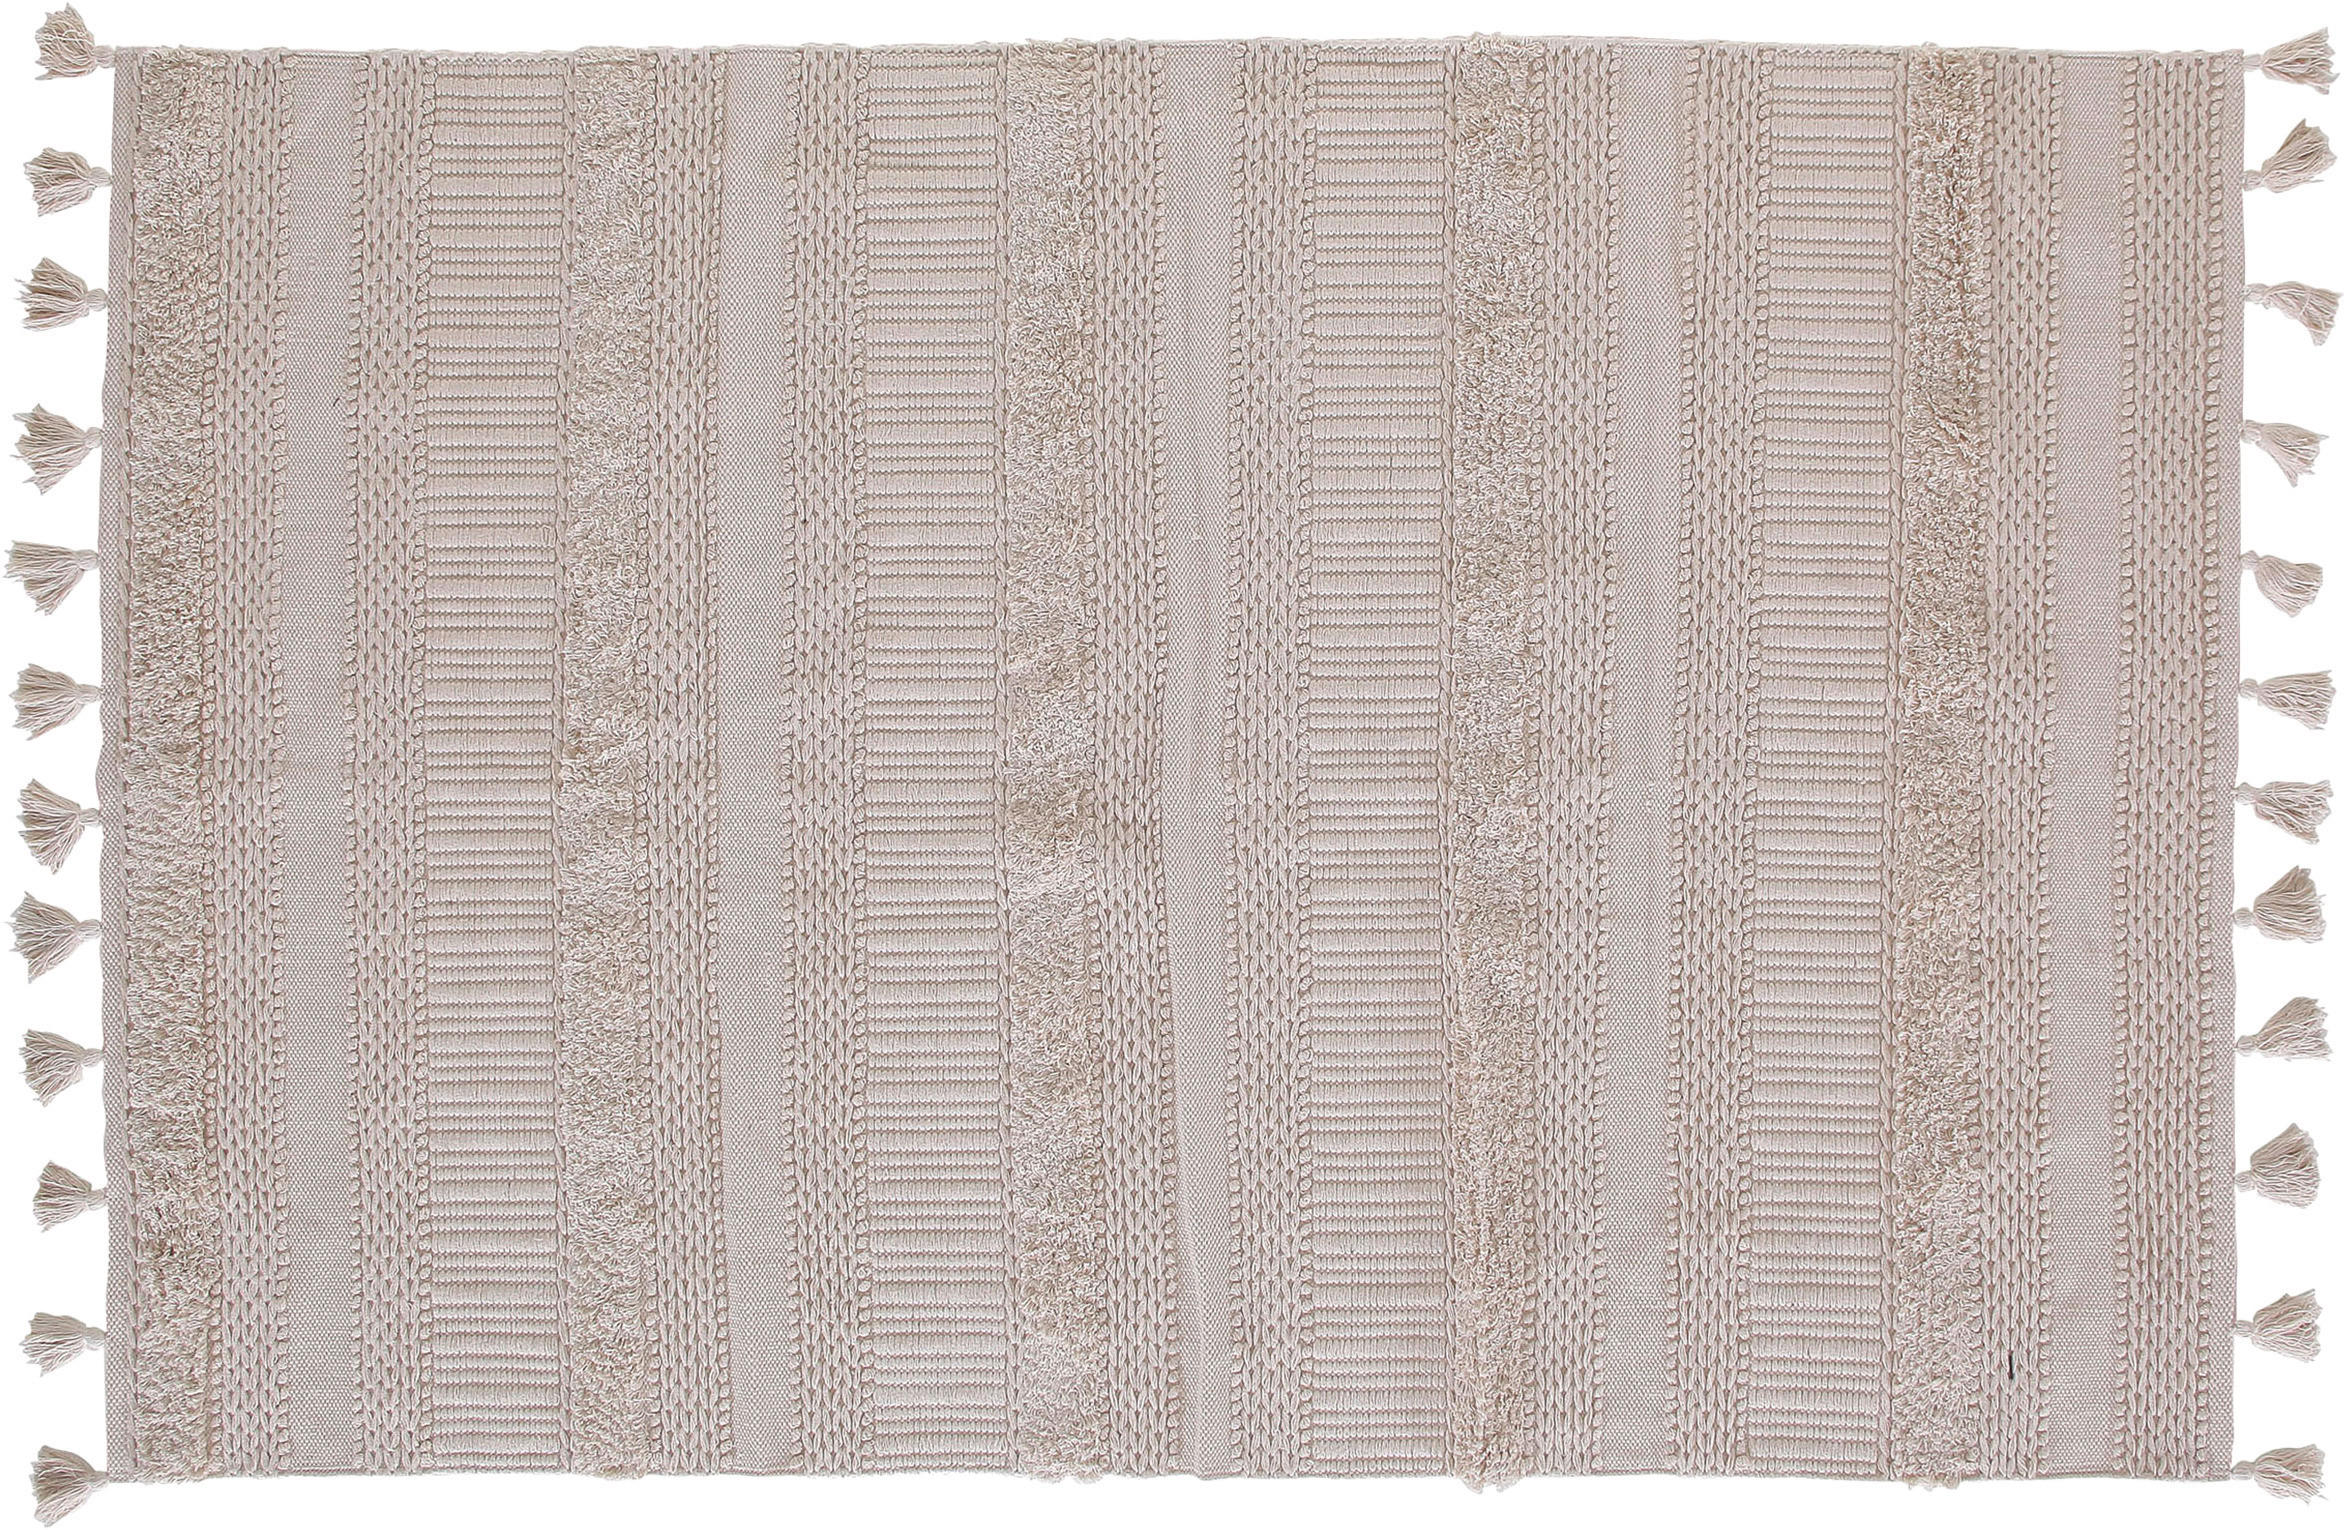 TEPPICH  230/160 cm  Grau, Hellgrau, Beige   - Beige/Hellgrau, Trend, Textil (230/160cm)